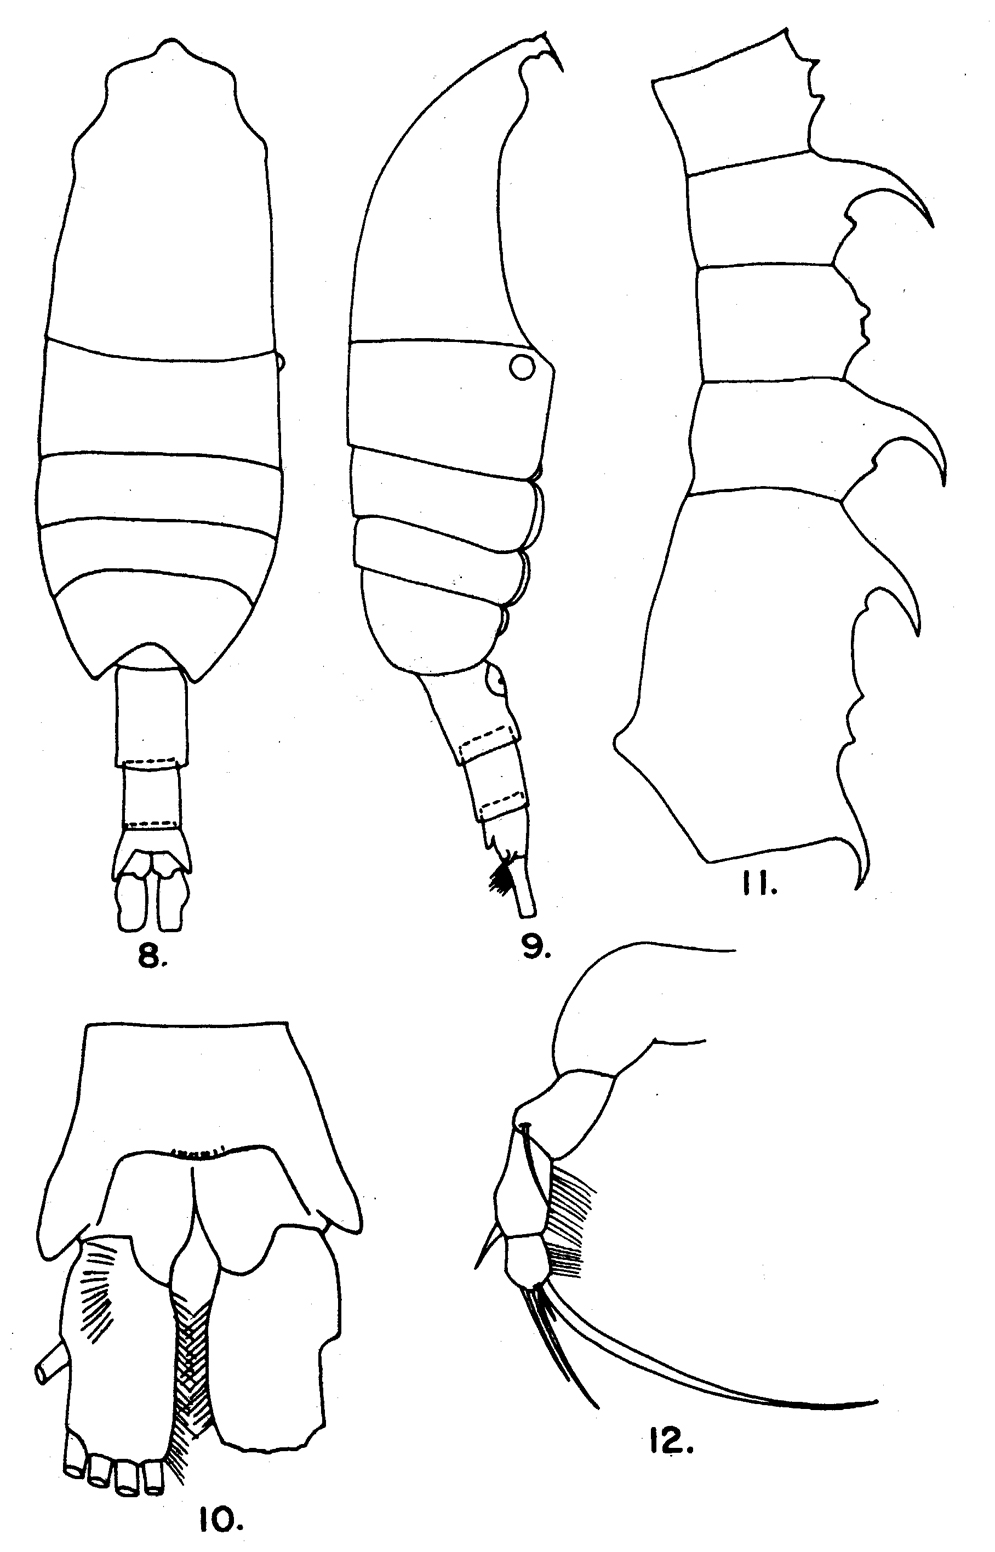 Species Pleuromamma quadrungulata - Plate 7 of morphological figures